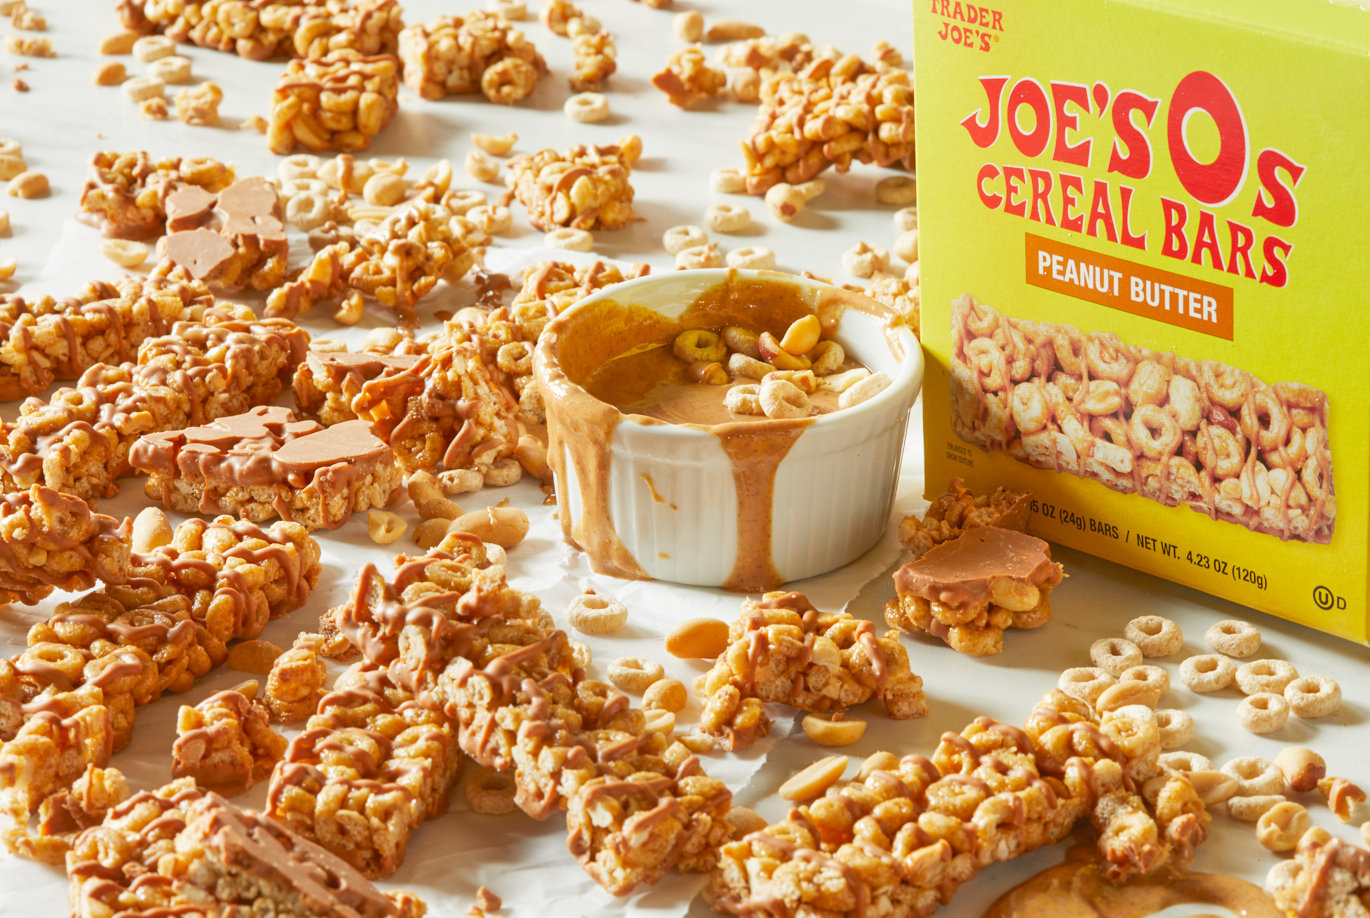 Crunchy Nut Cereals & Bars, Our Brands